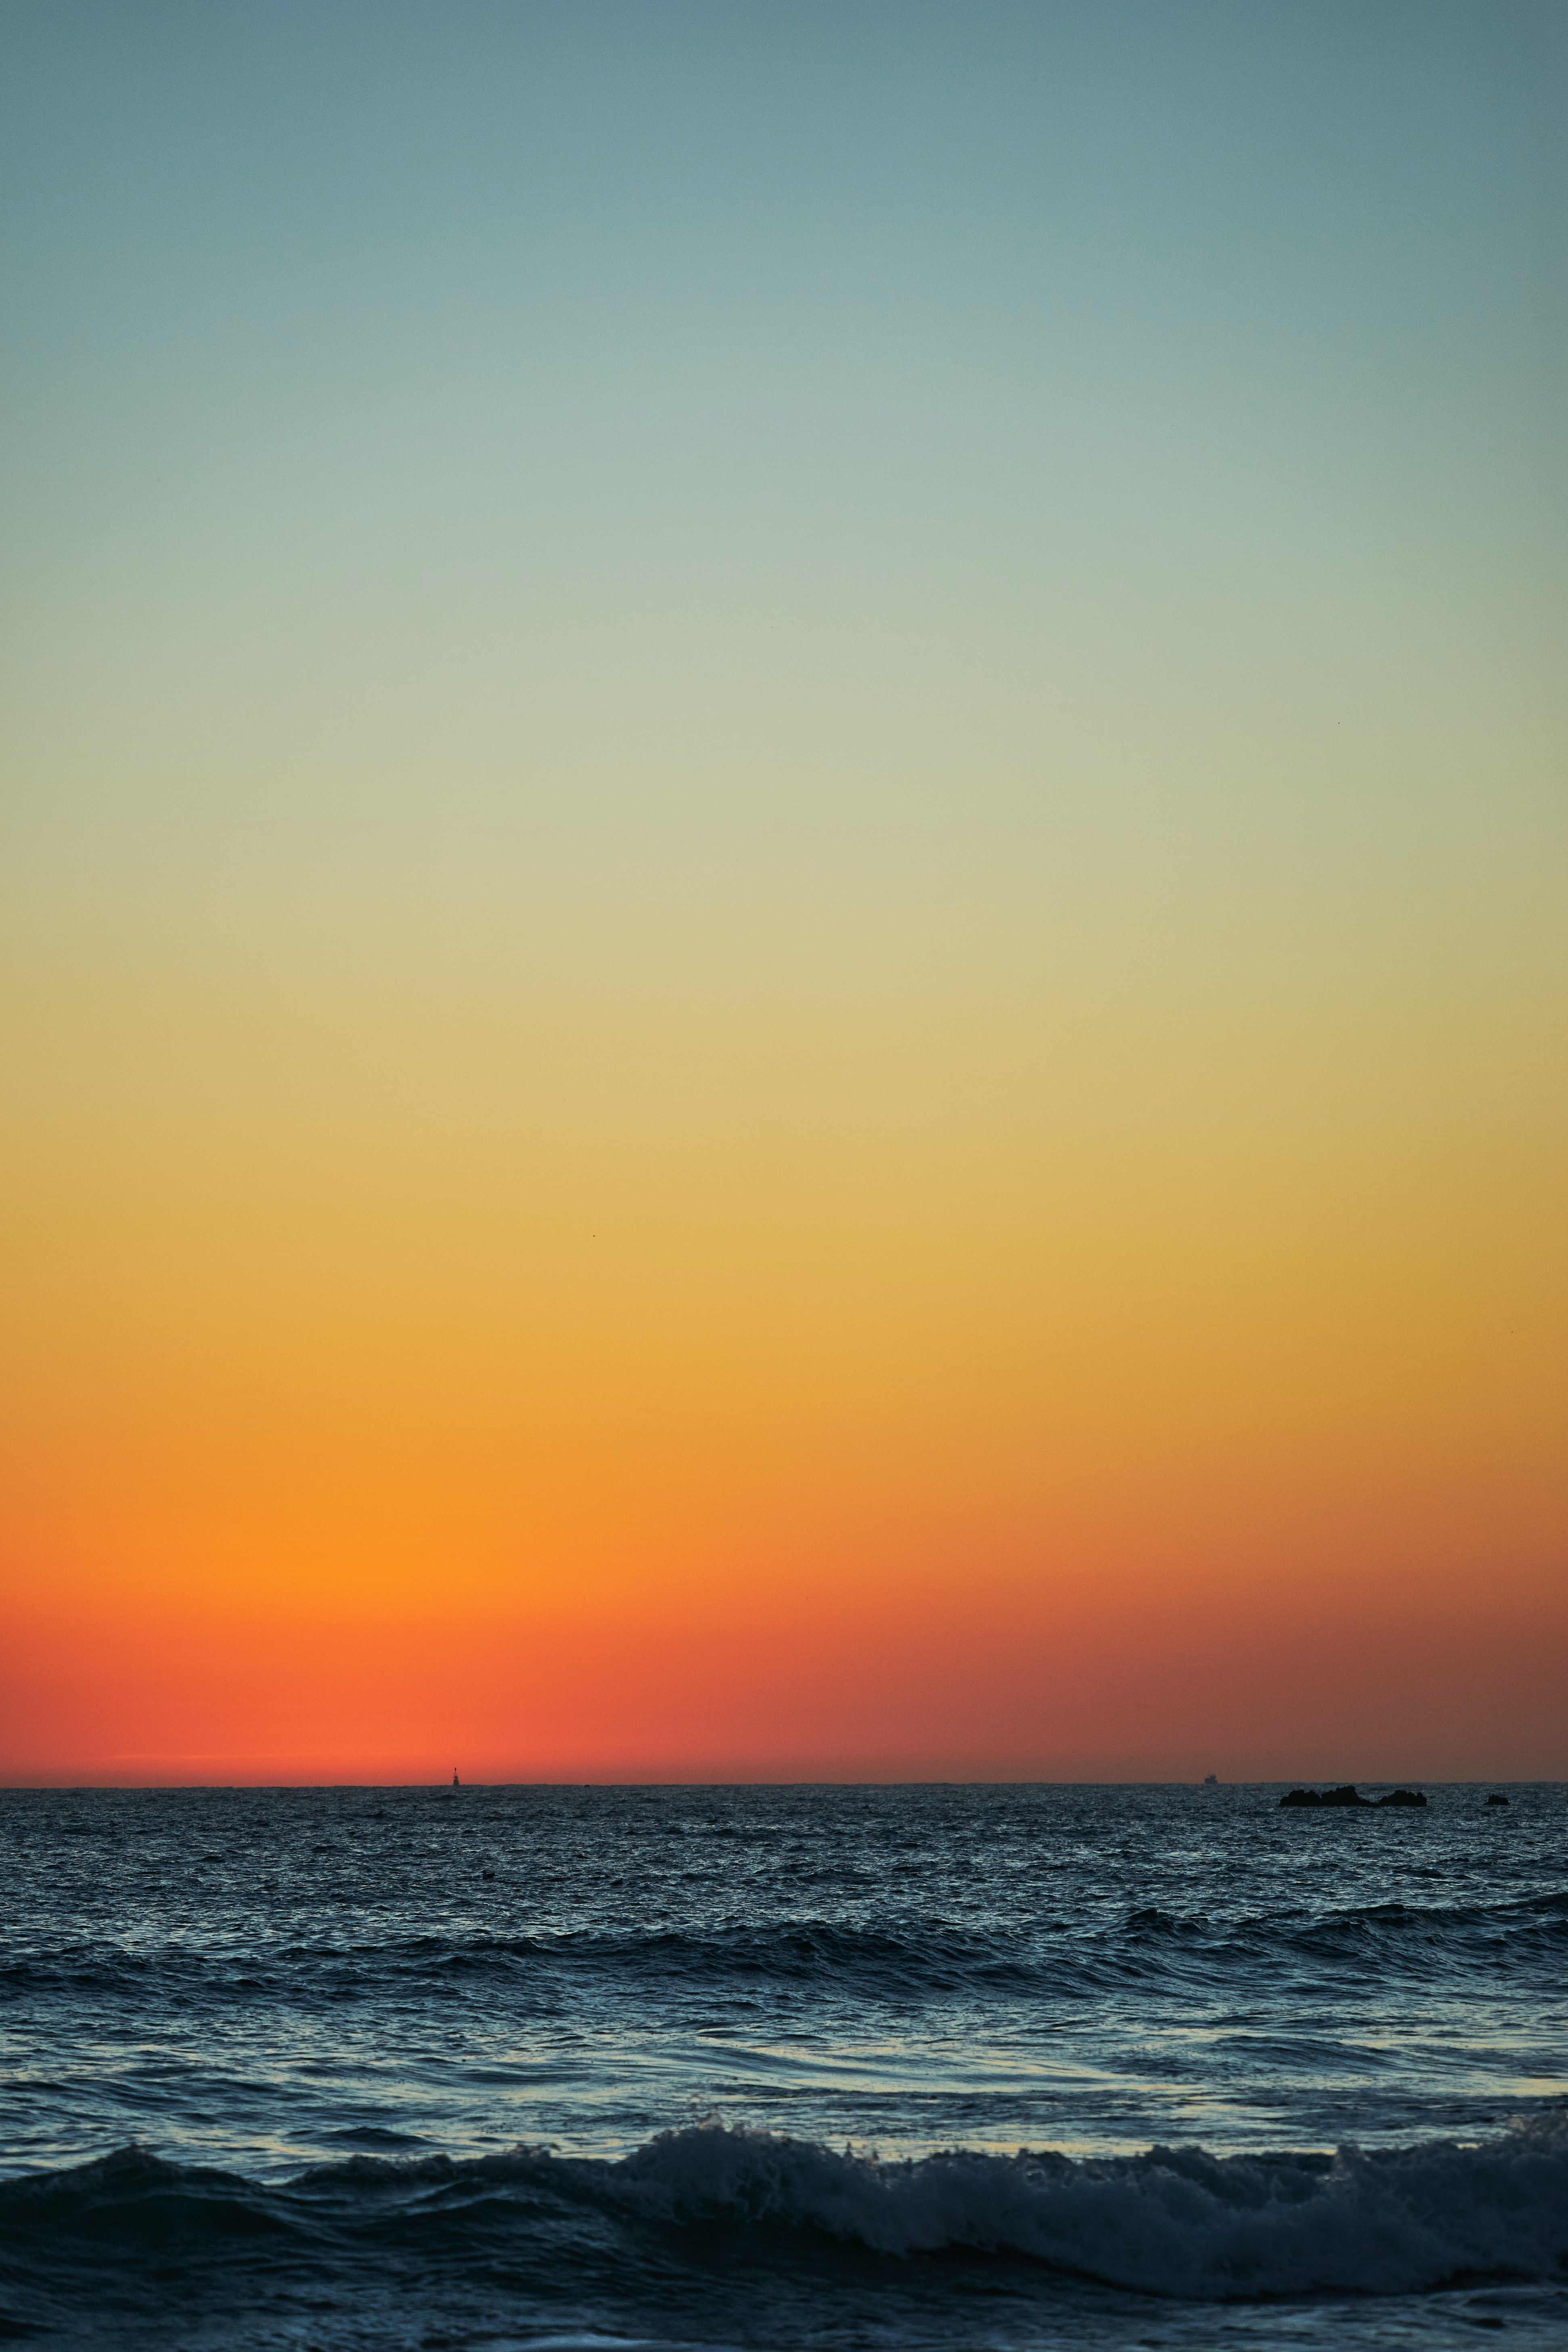 Download background wavy, nature, sunset, sea, waves, horizon